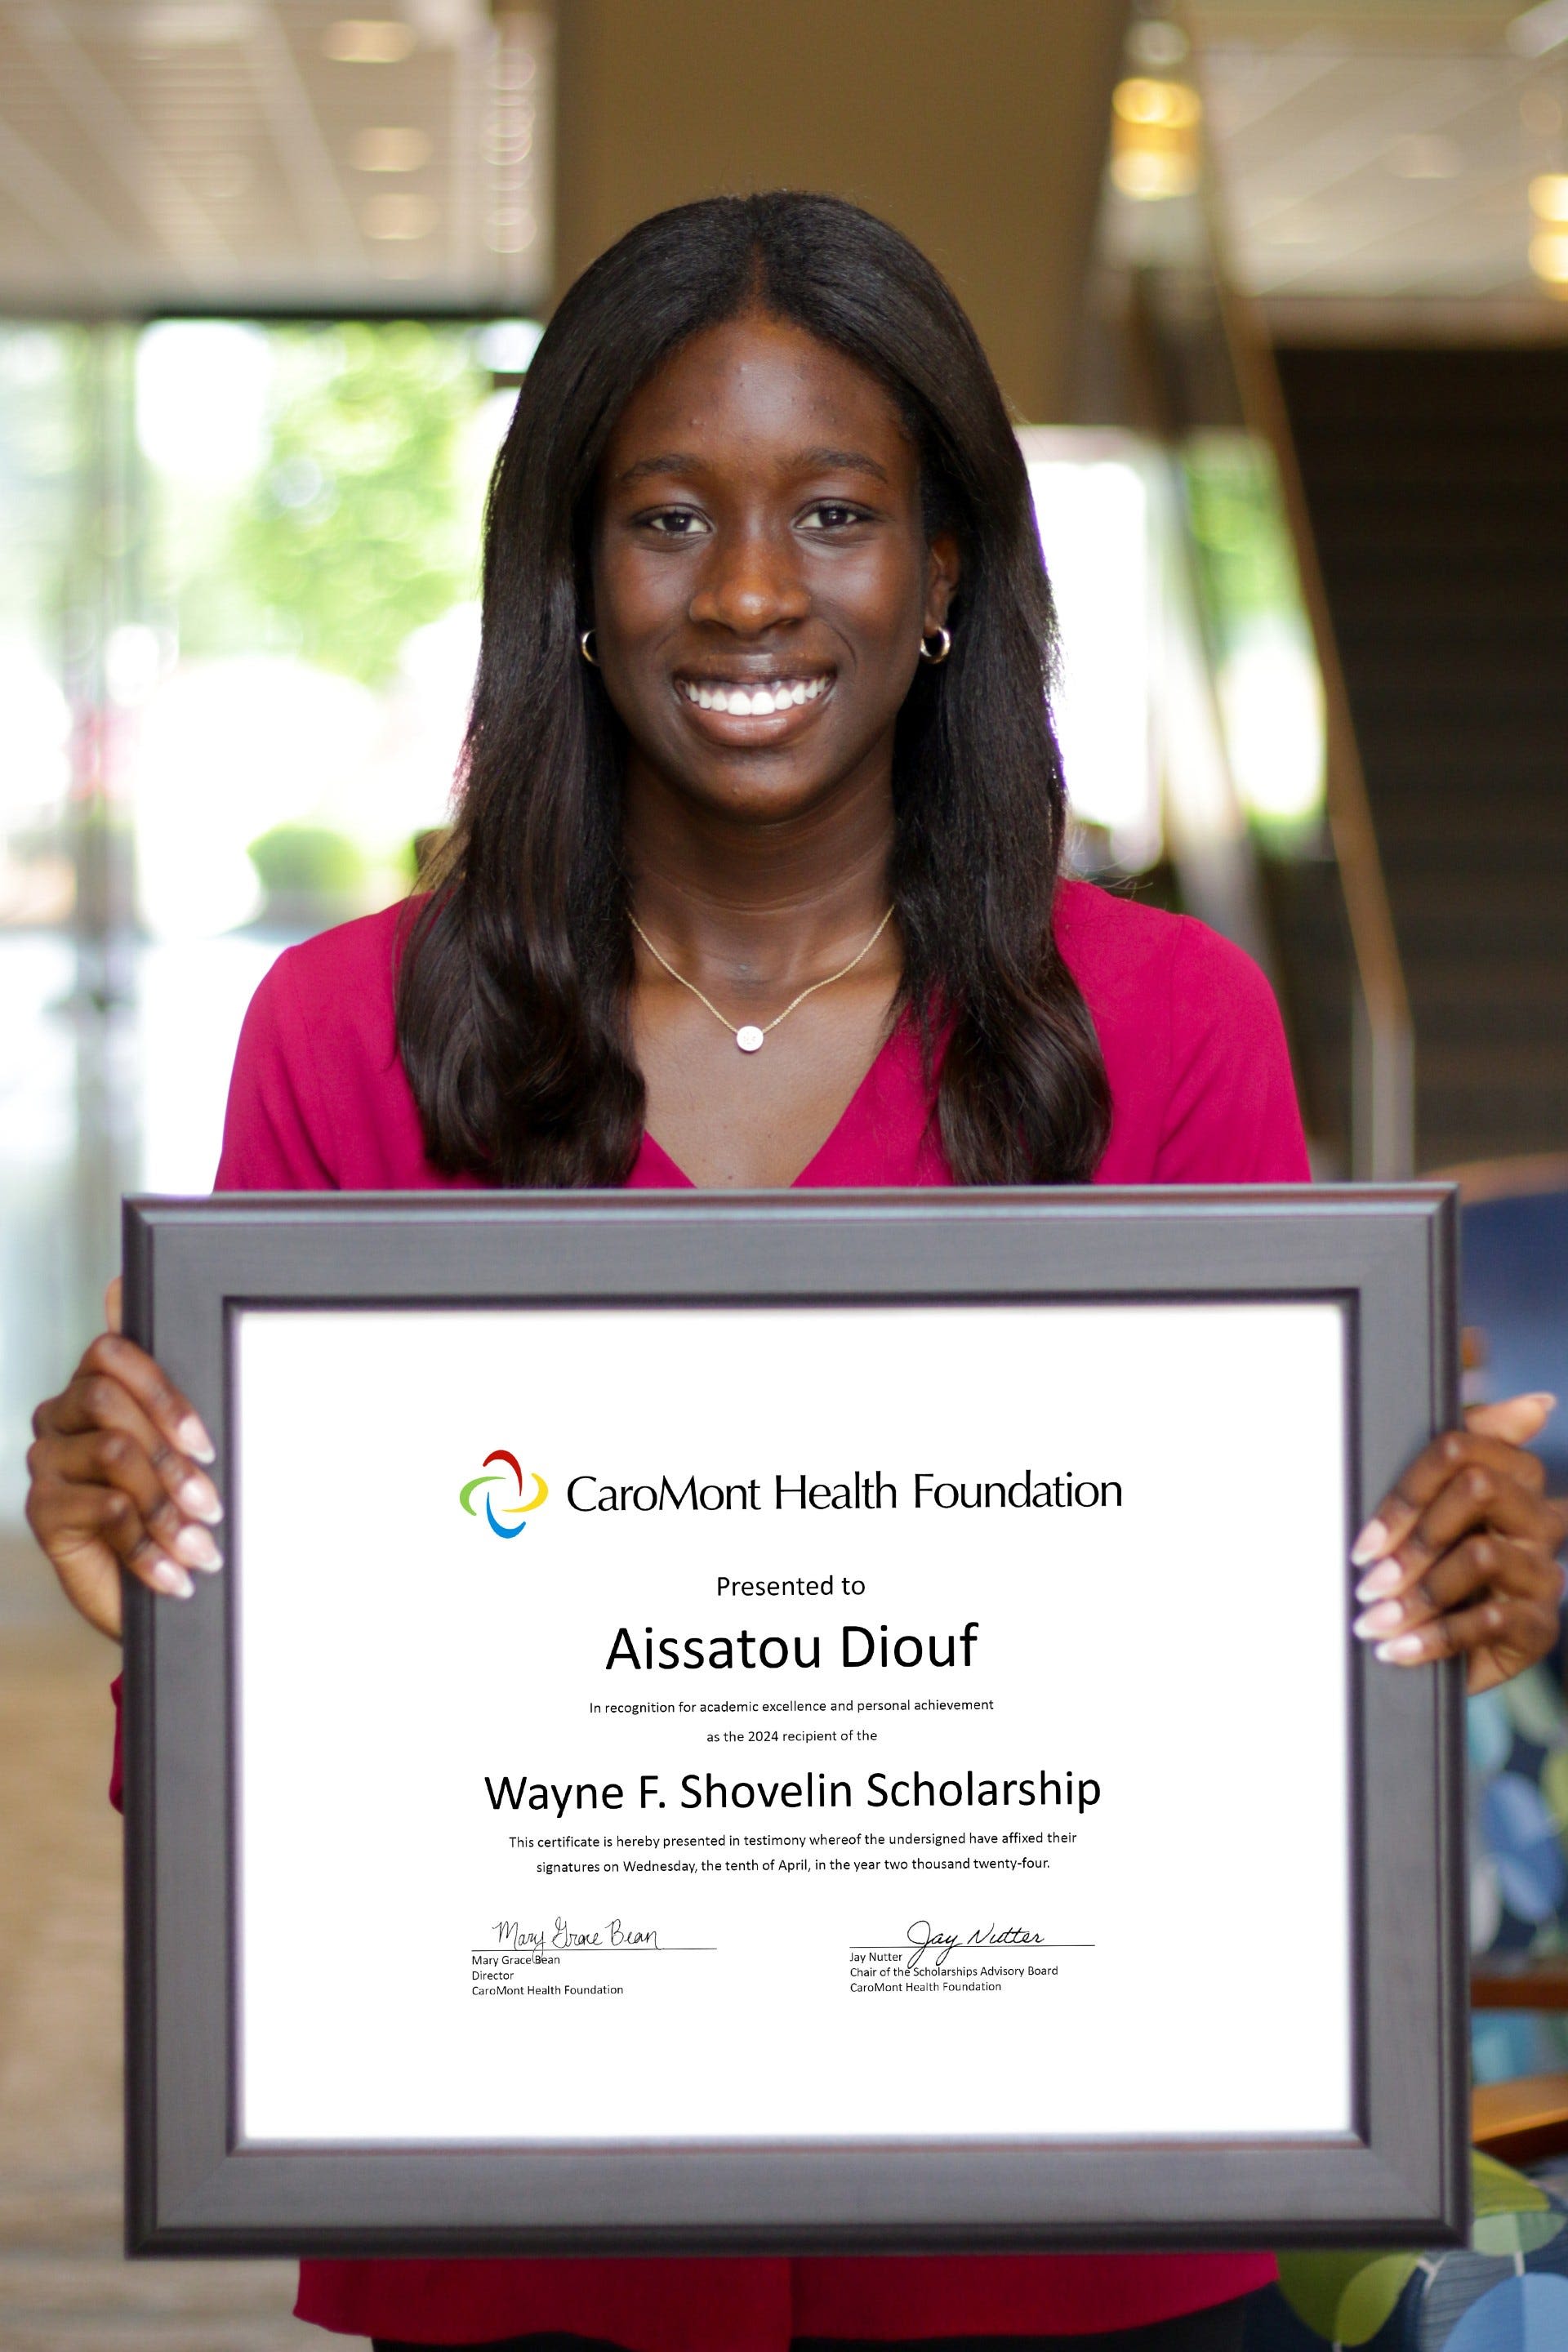 Gaston senior awarded large scholarship from CaroMont Health